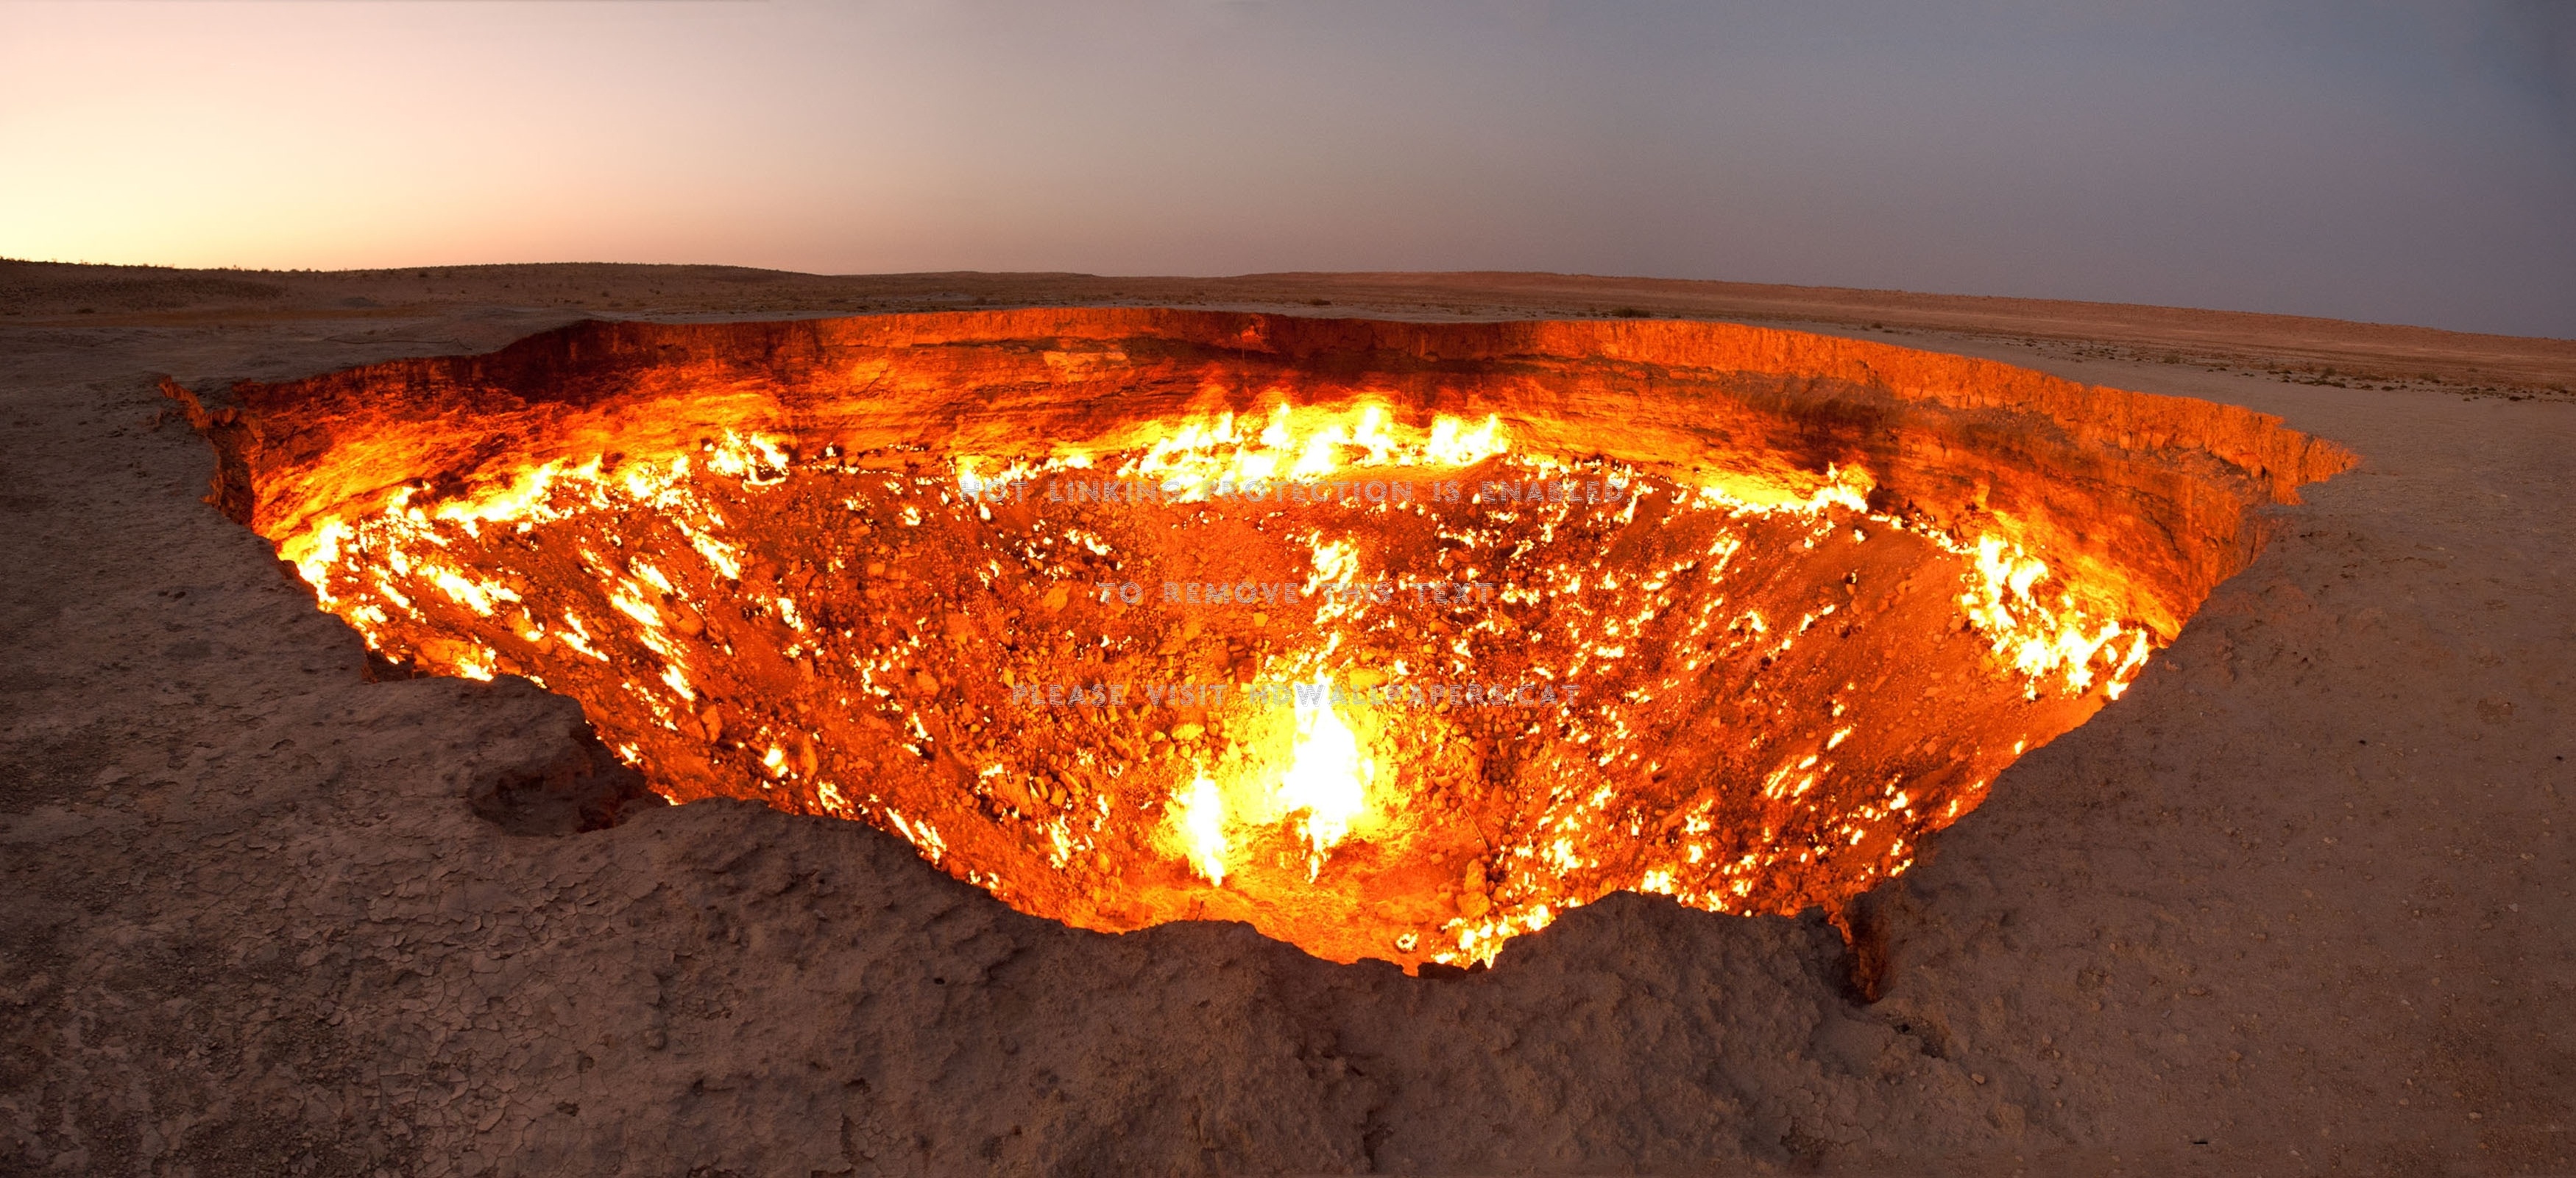 The Door to Hell, Turkmenistan's natural wonder, Derweze fire, Fascinating Turkmenistan phenomenon, 3500x1600 Dual Screen Desktop